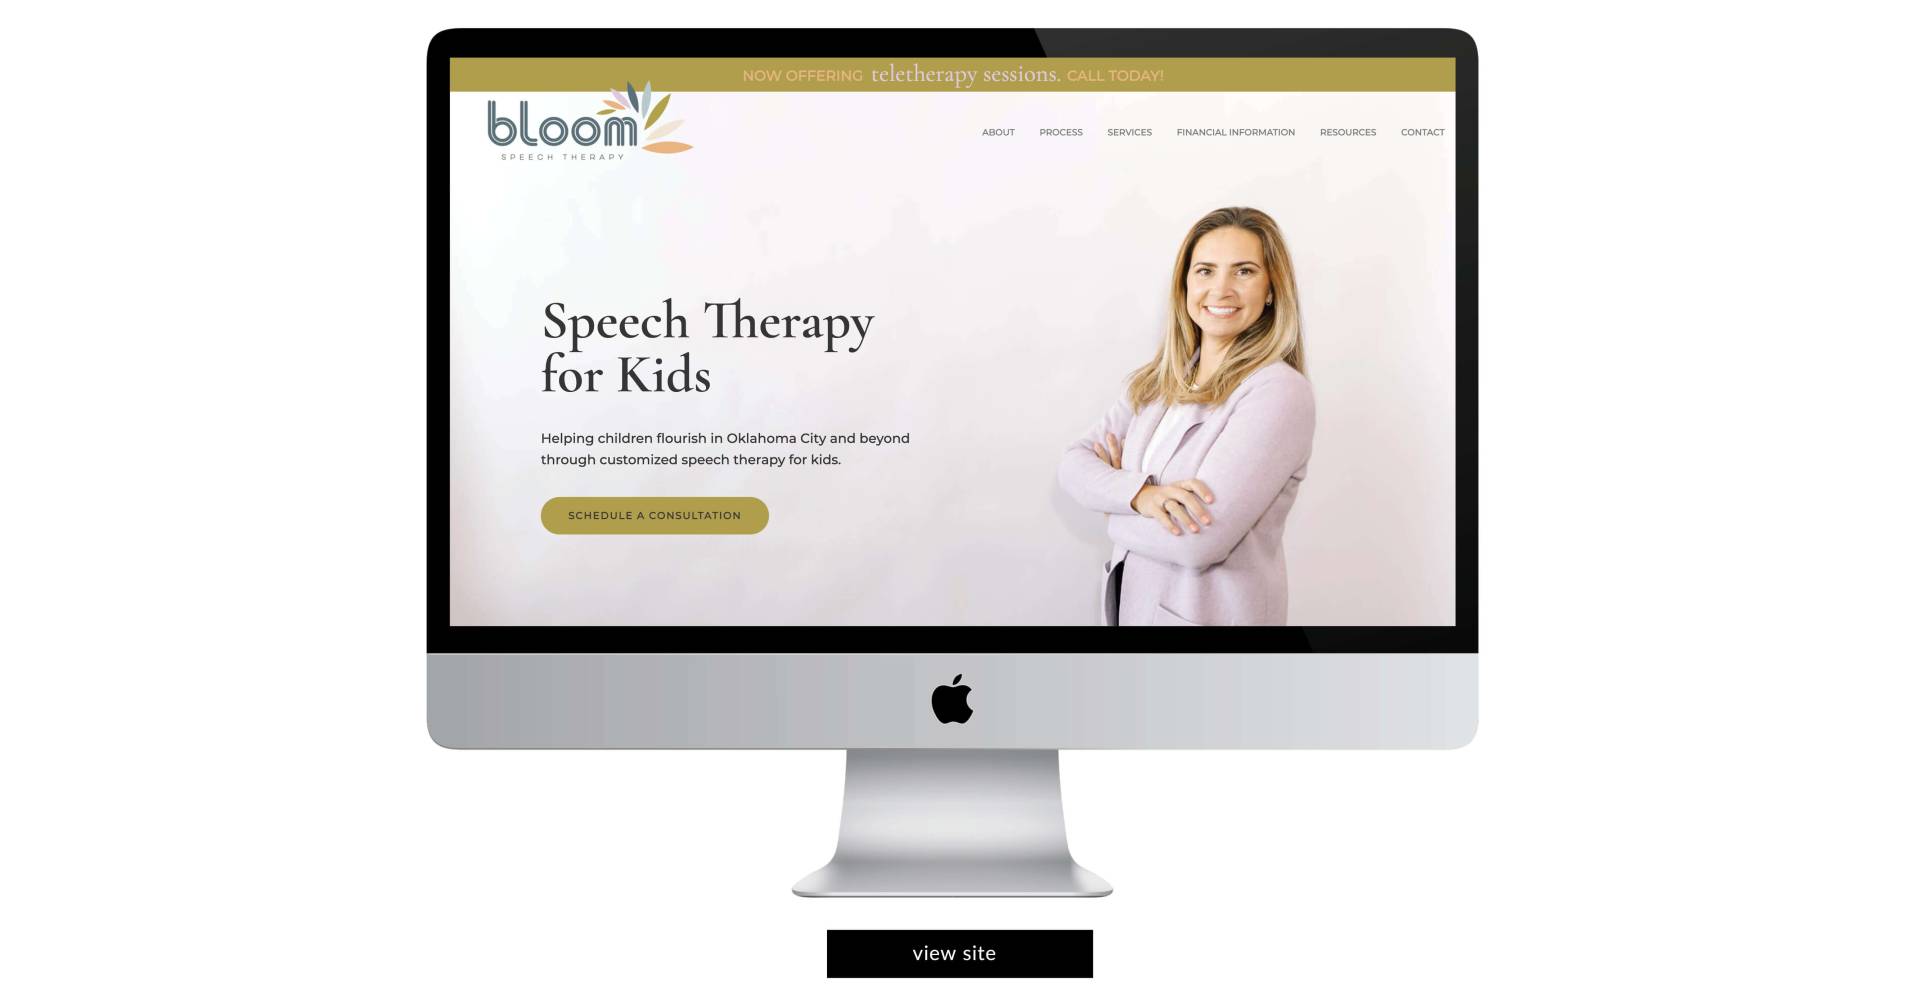 Bloom Speech Therapy - Digital Marketing for Medical Companies - Brandlink Media Marketing Agency 3